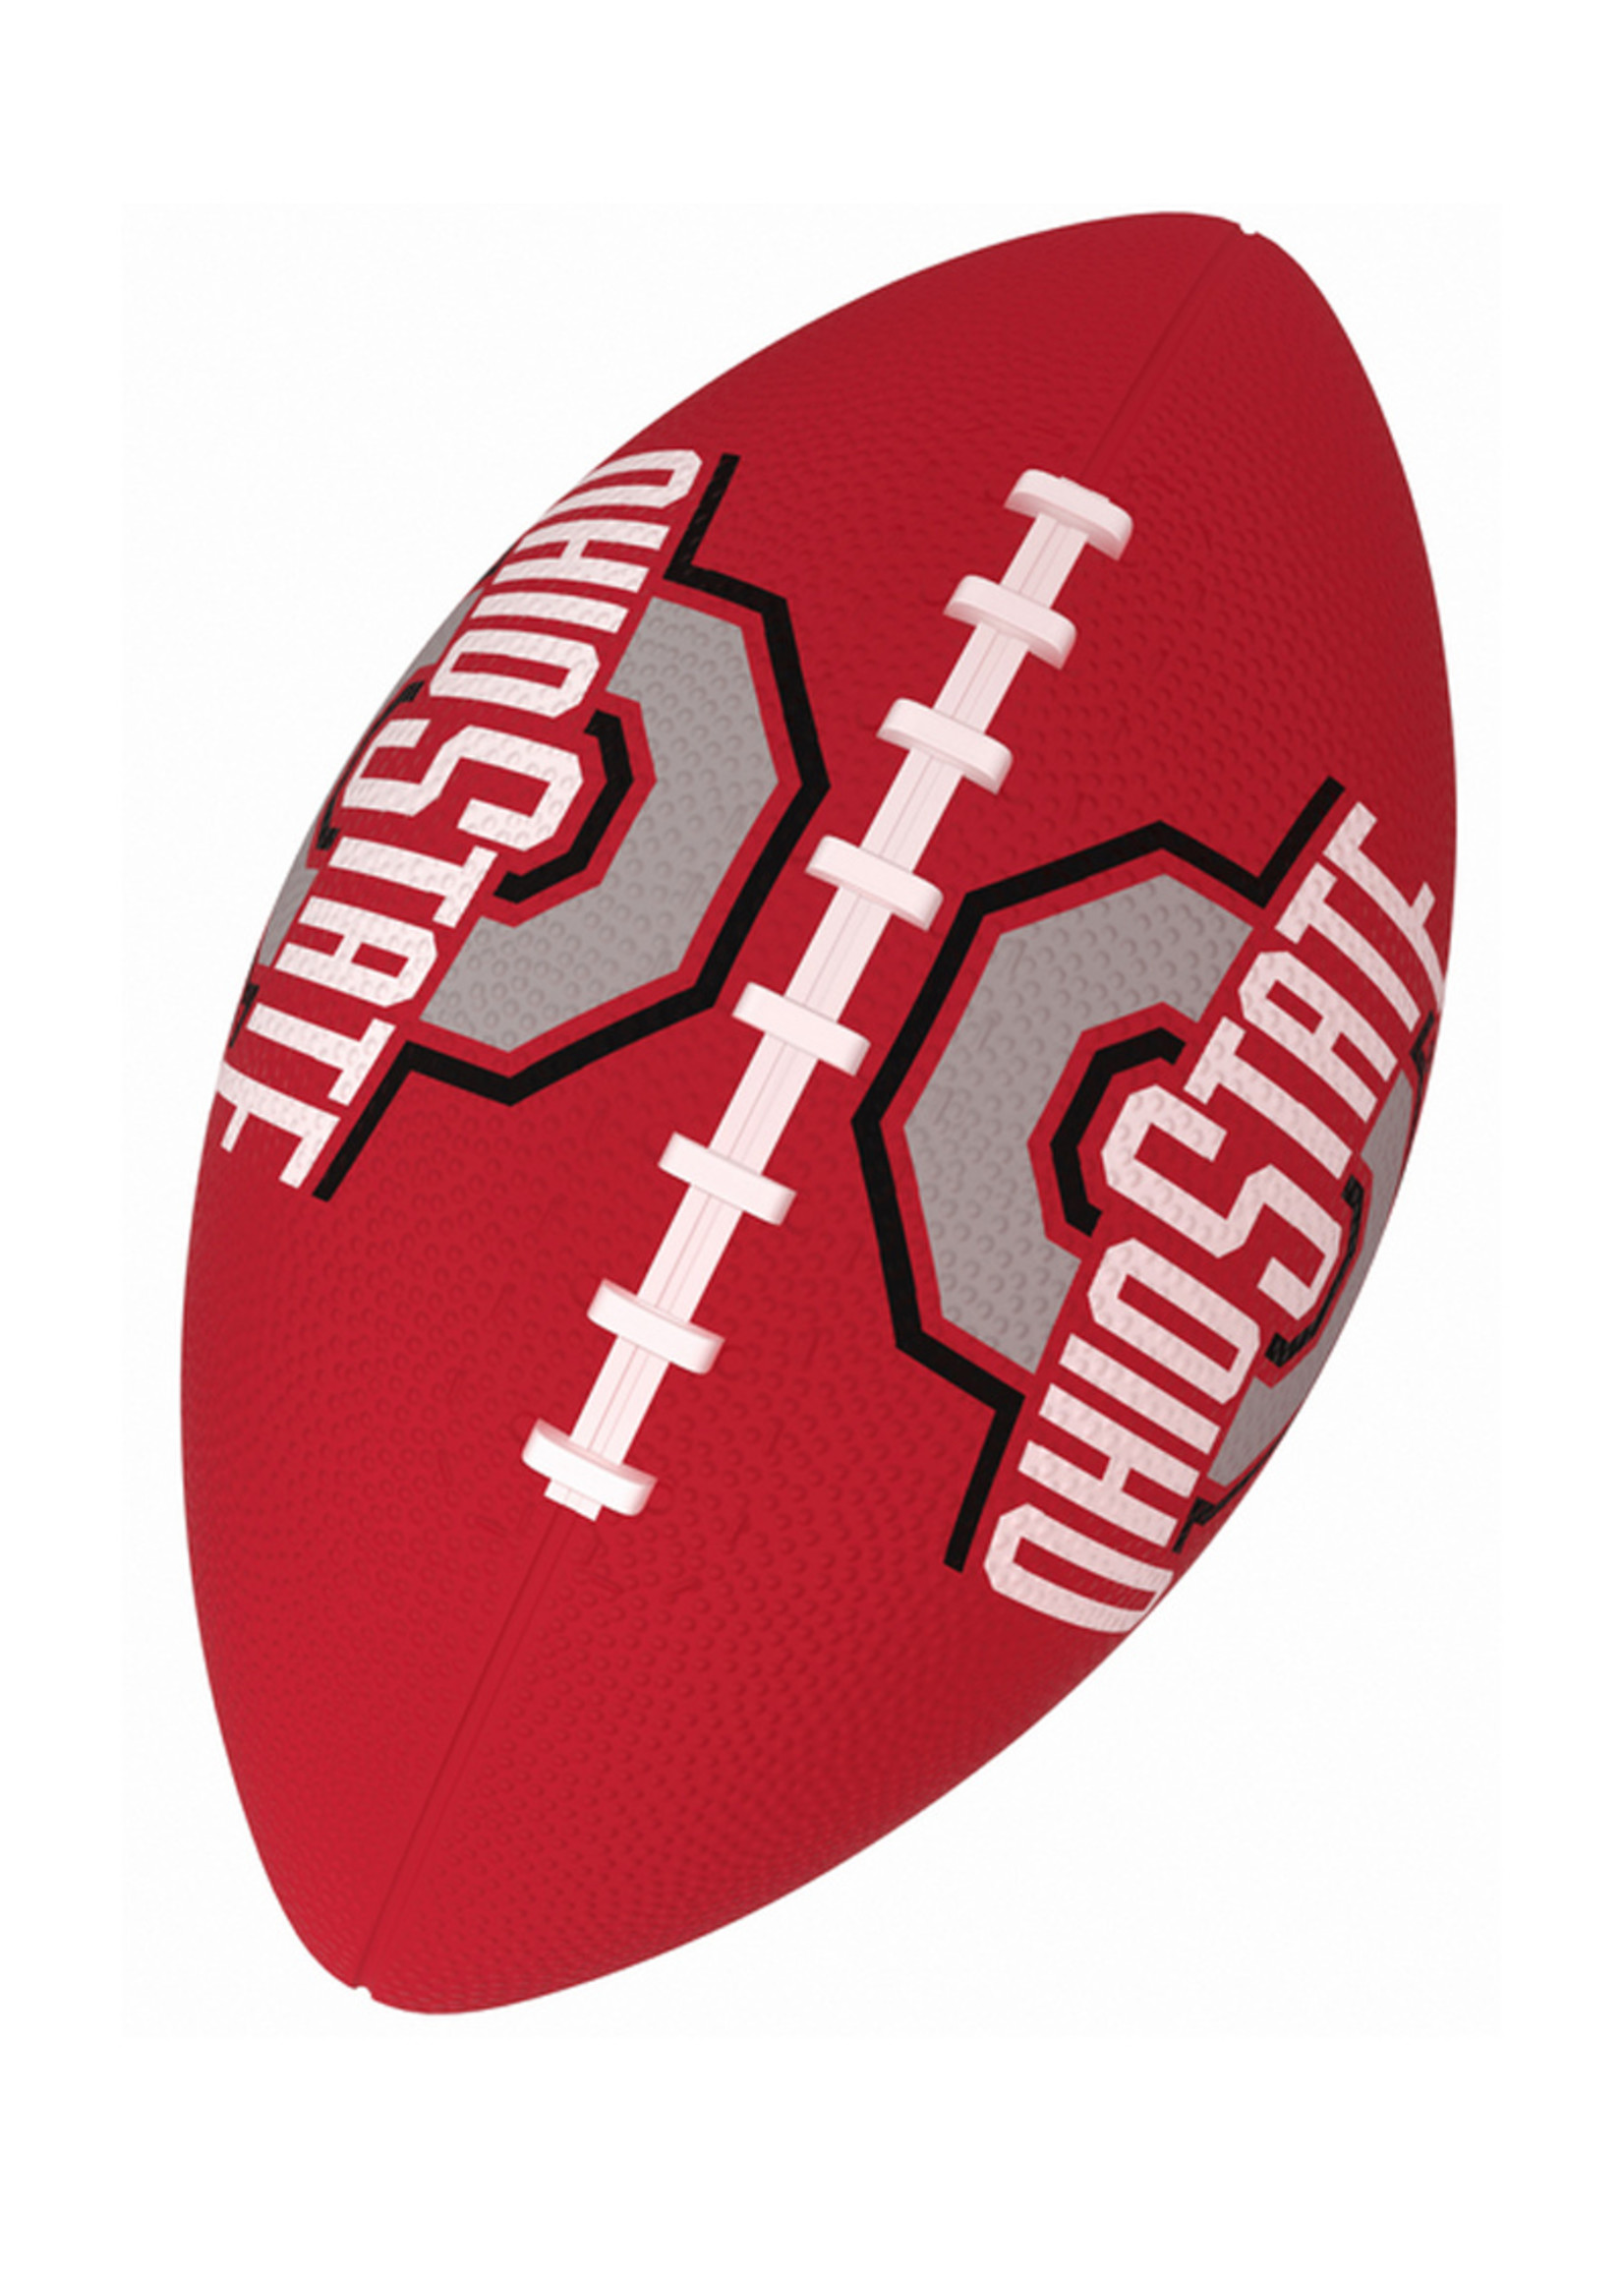 Ohio State Combo Logo Junior-Size Rubber Football